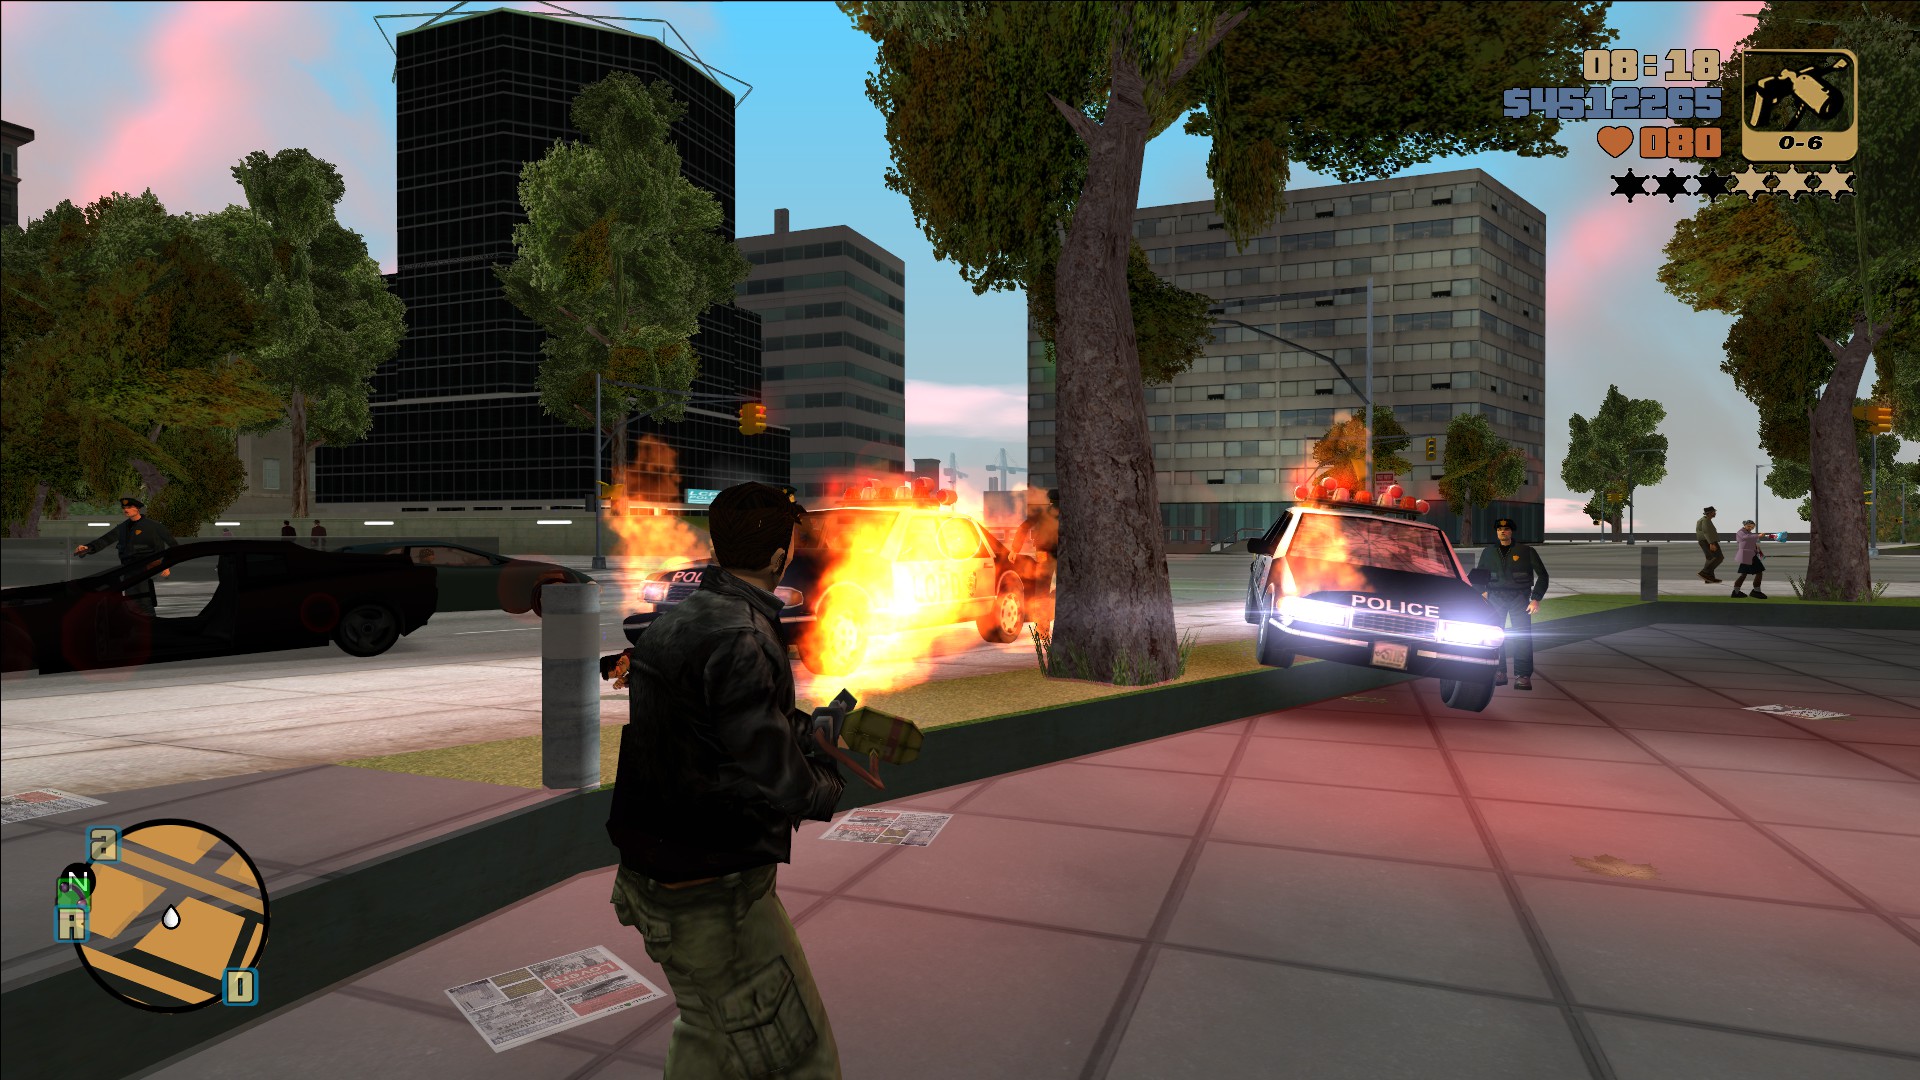 Steam Community :: Grand Theft Auto III